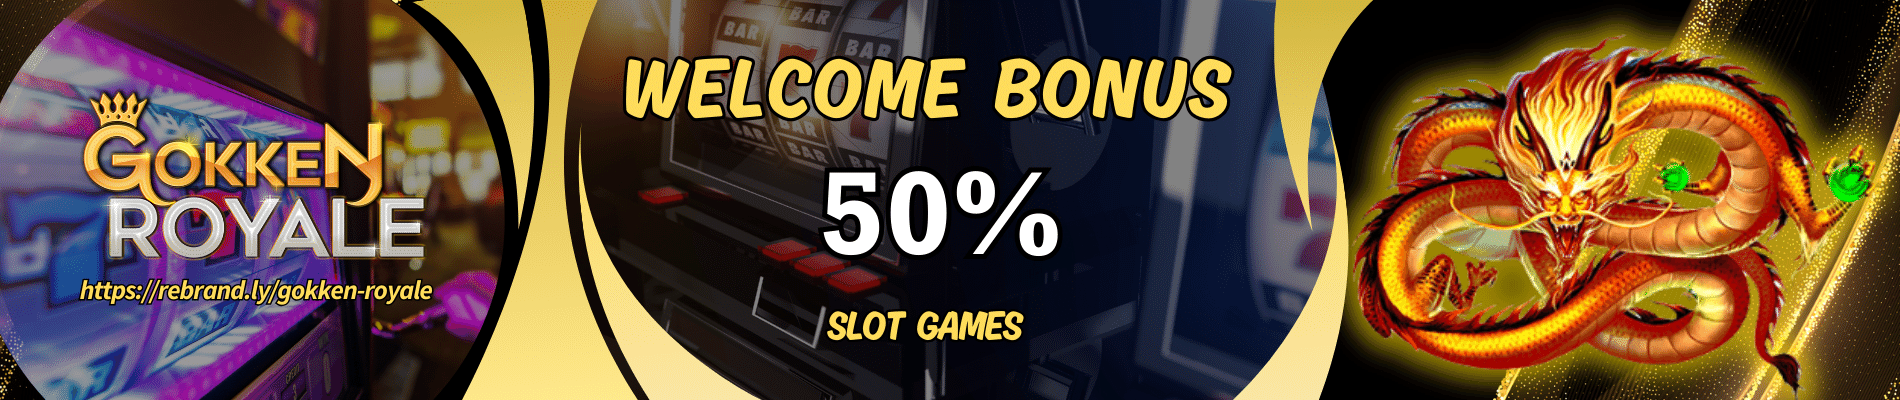 Welcome Bonus 50% | Slot Games